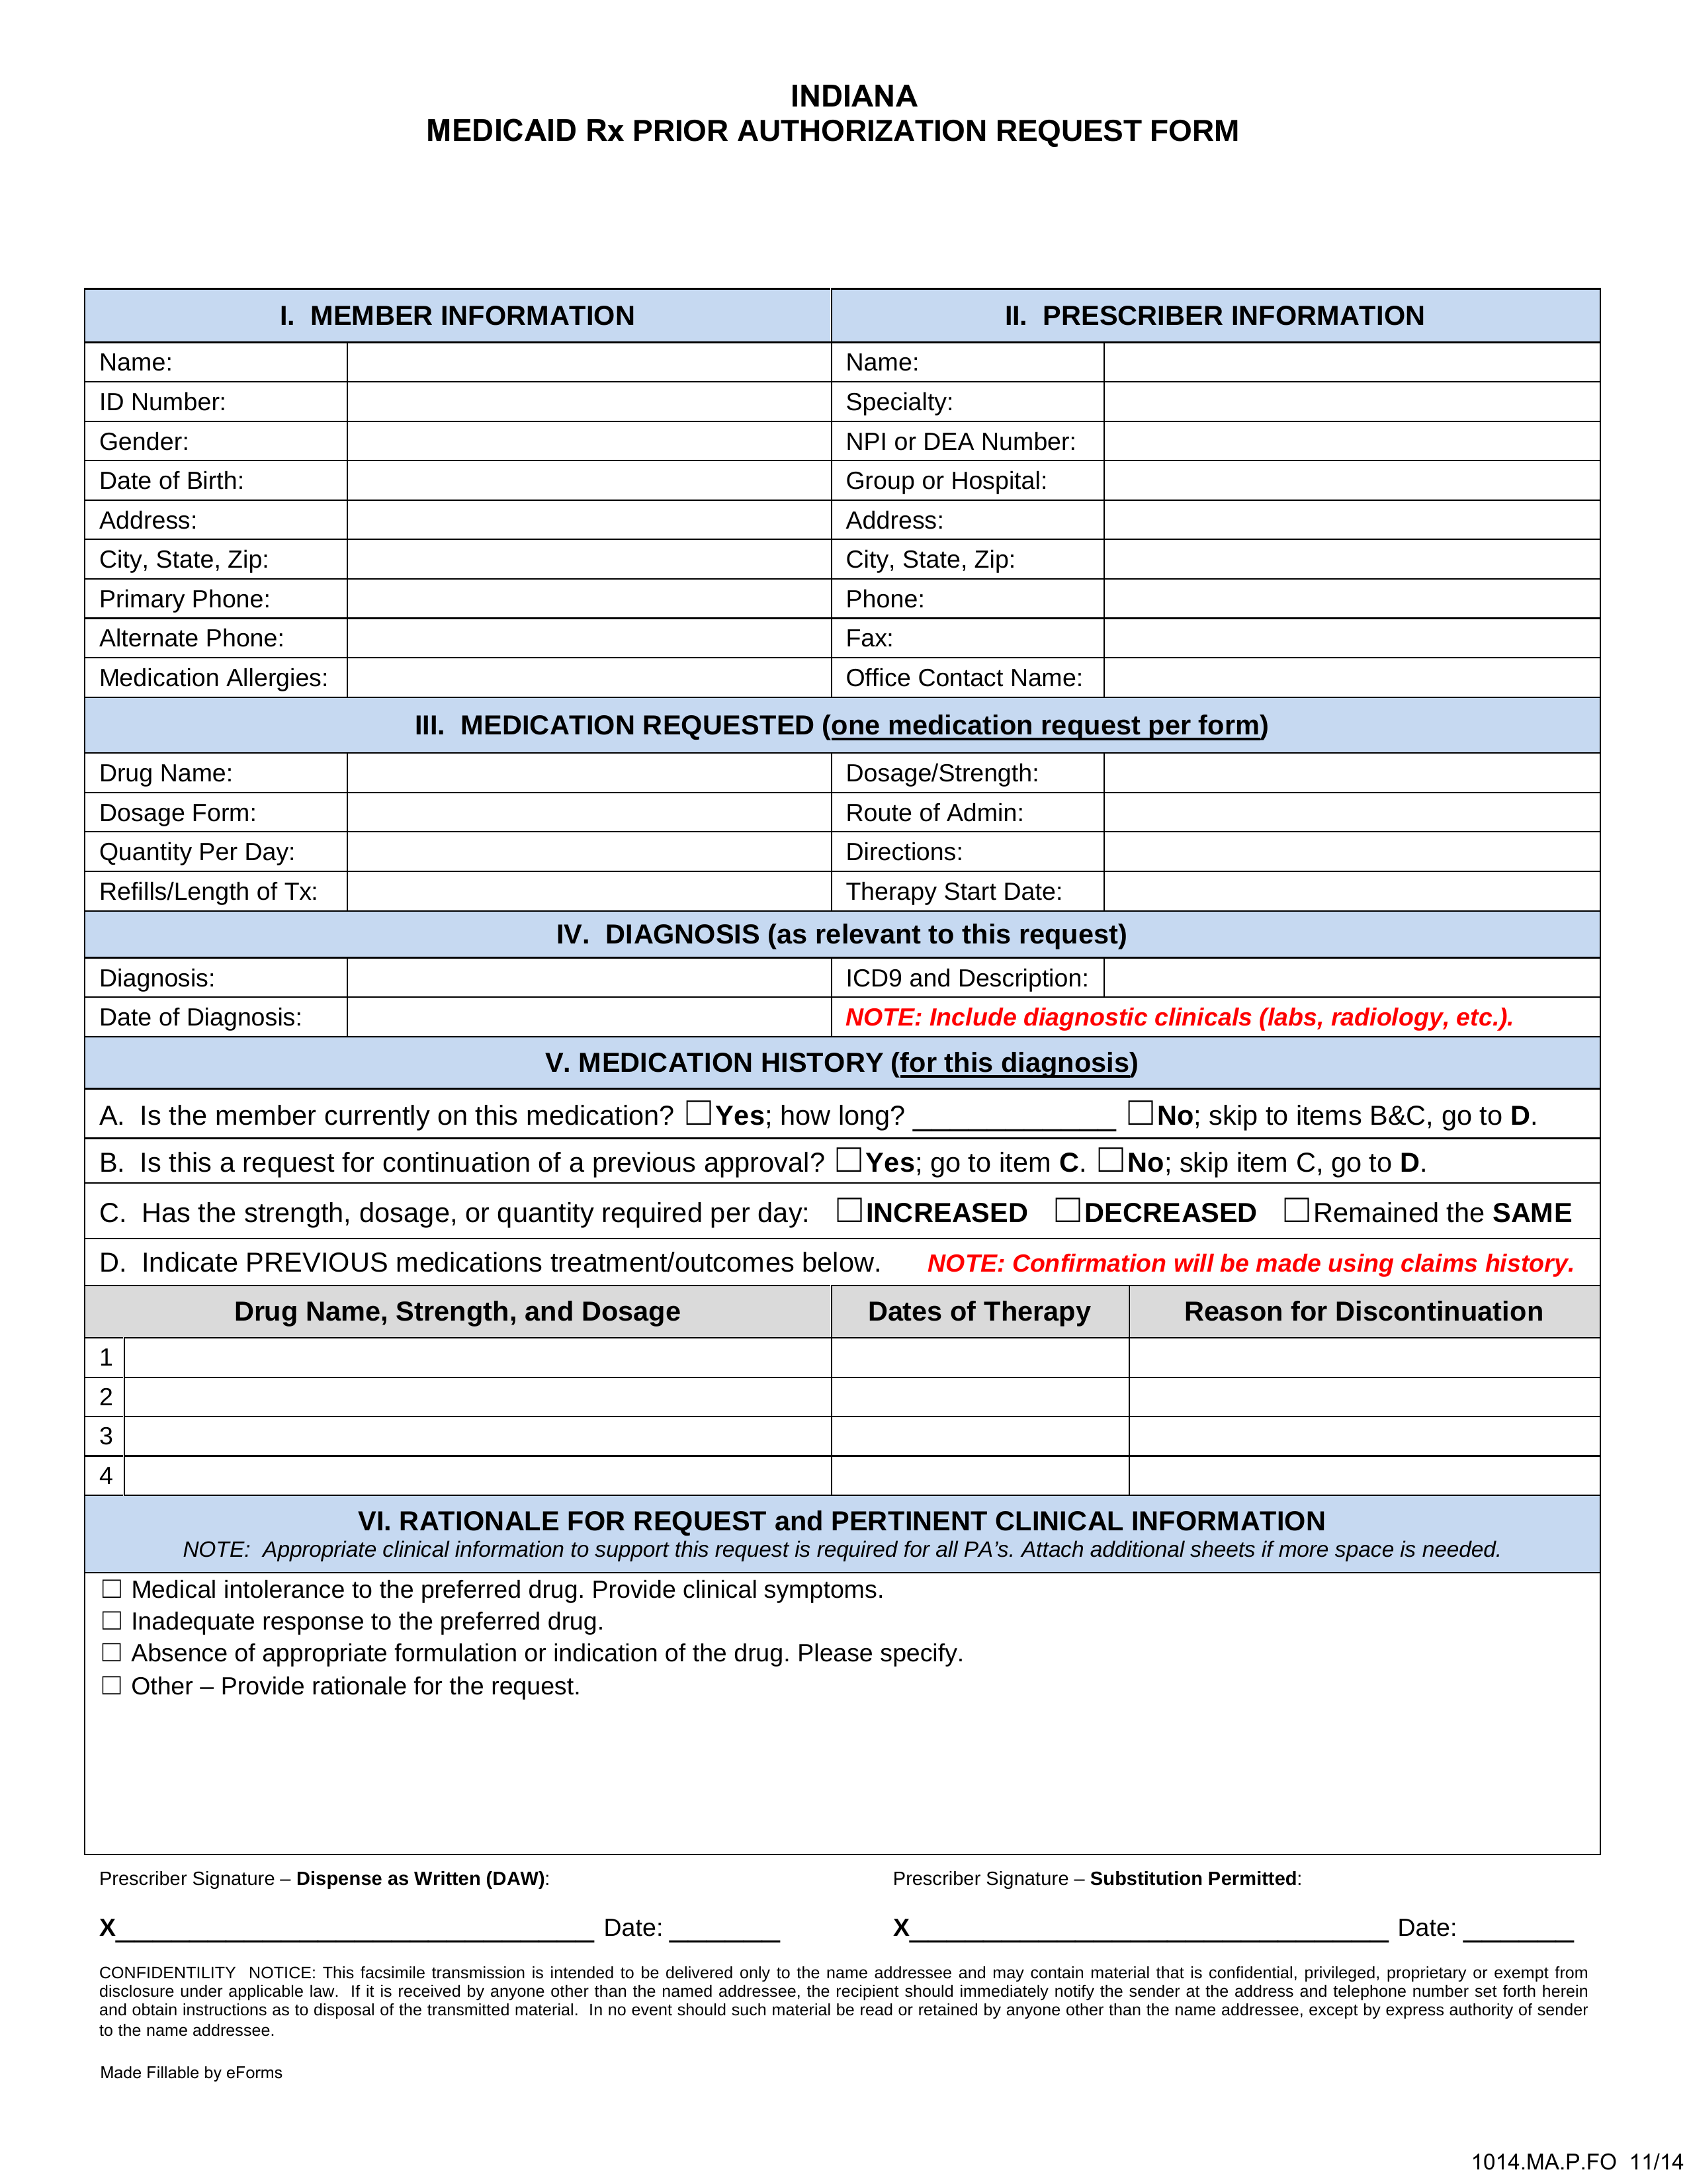 Indiana Medicaid Prior (Rx) Authorization Form